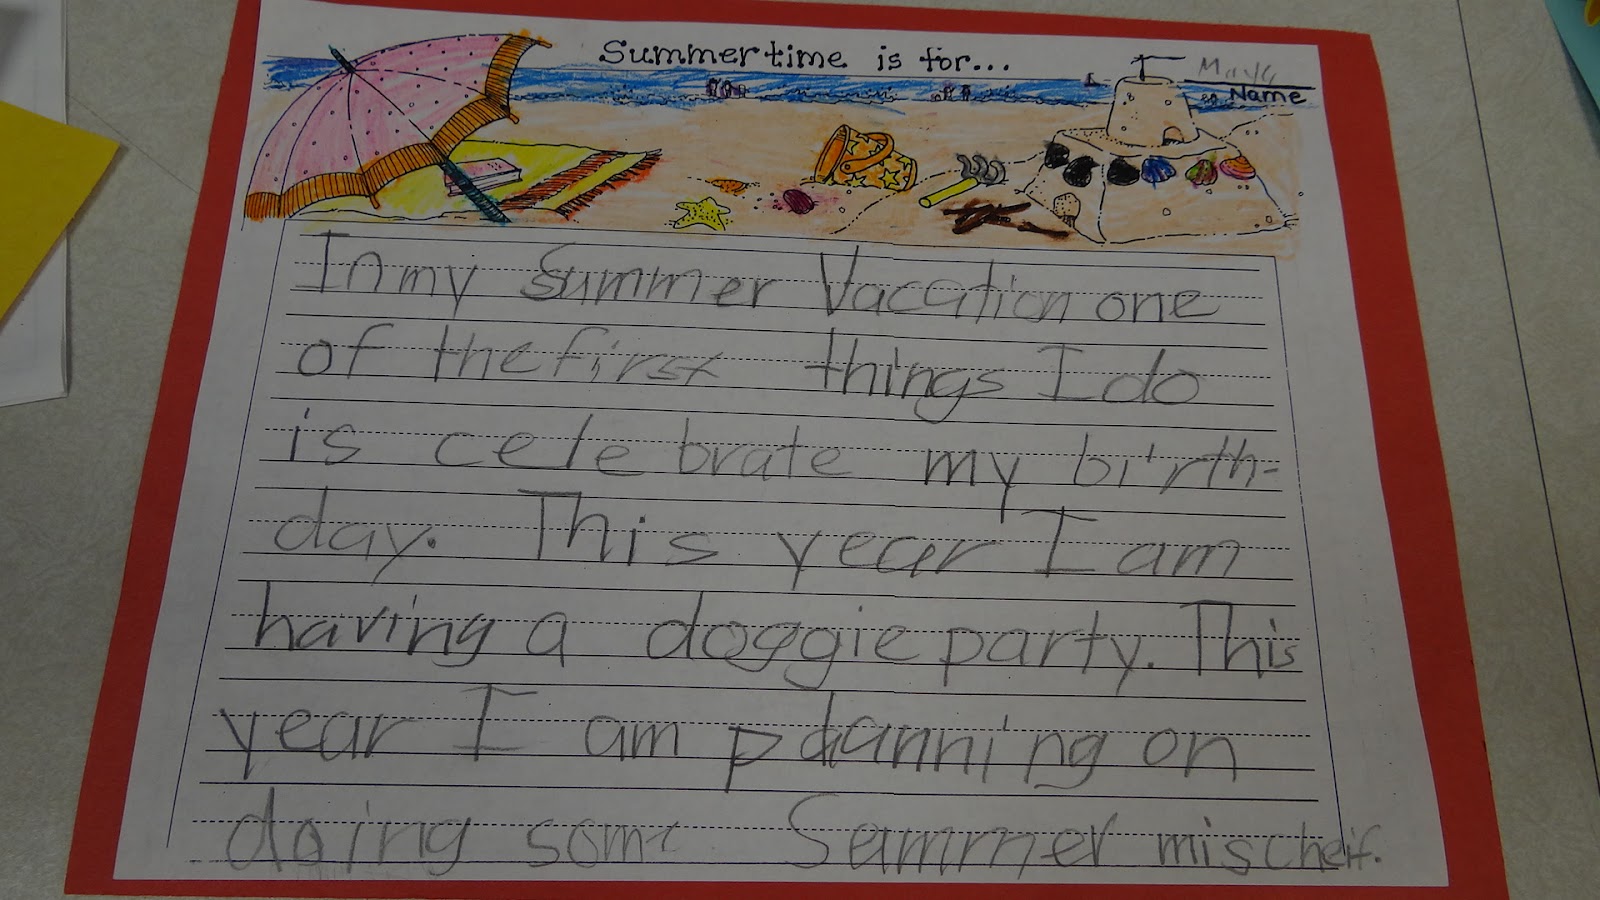 Summer vacation essay for kids